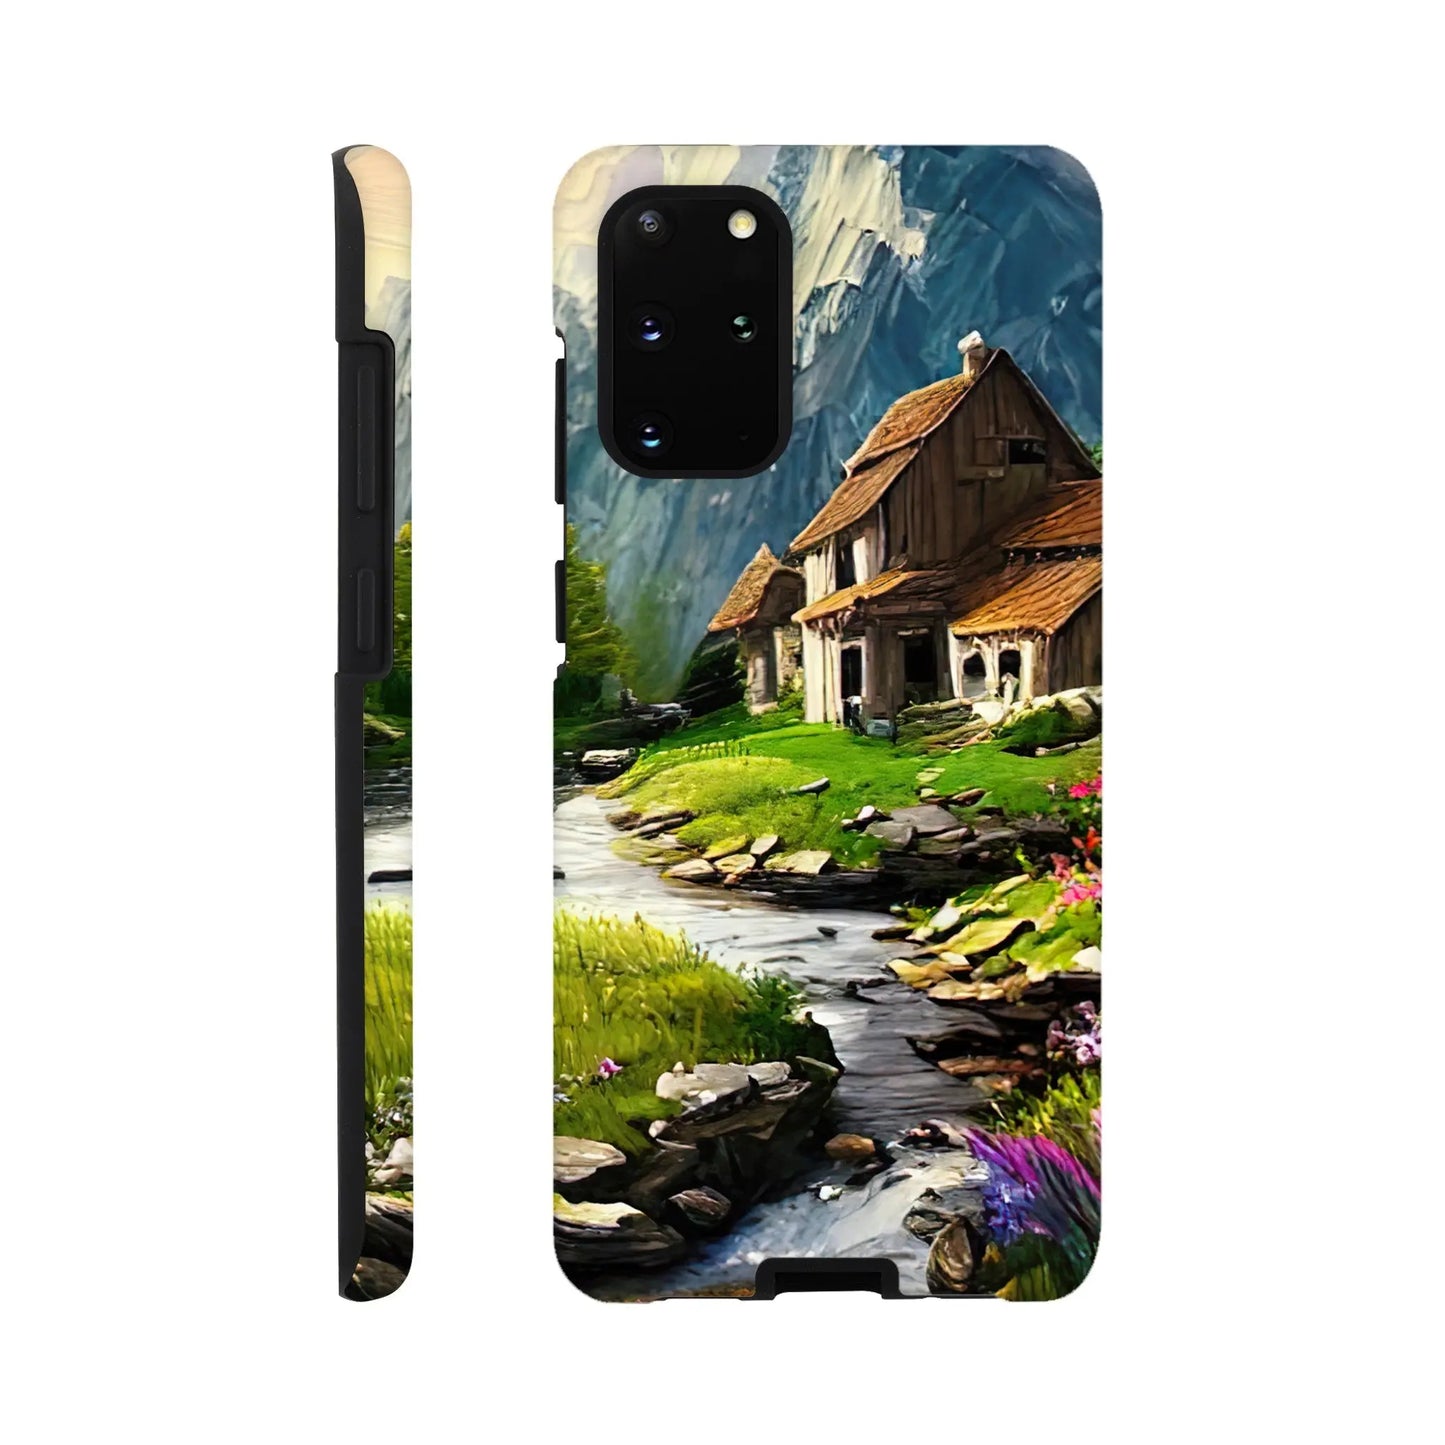 Smartphone-Hülle "Hart" - Berglandschaft - Malerischer Stil, KI-Kunst RolConArt, Landschaften, Galaxy-S20-Plus